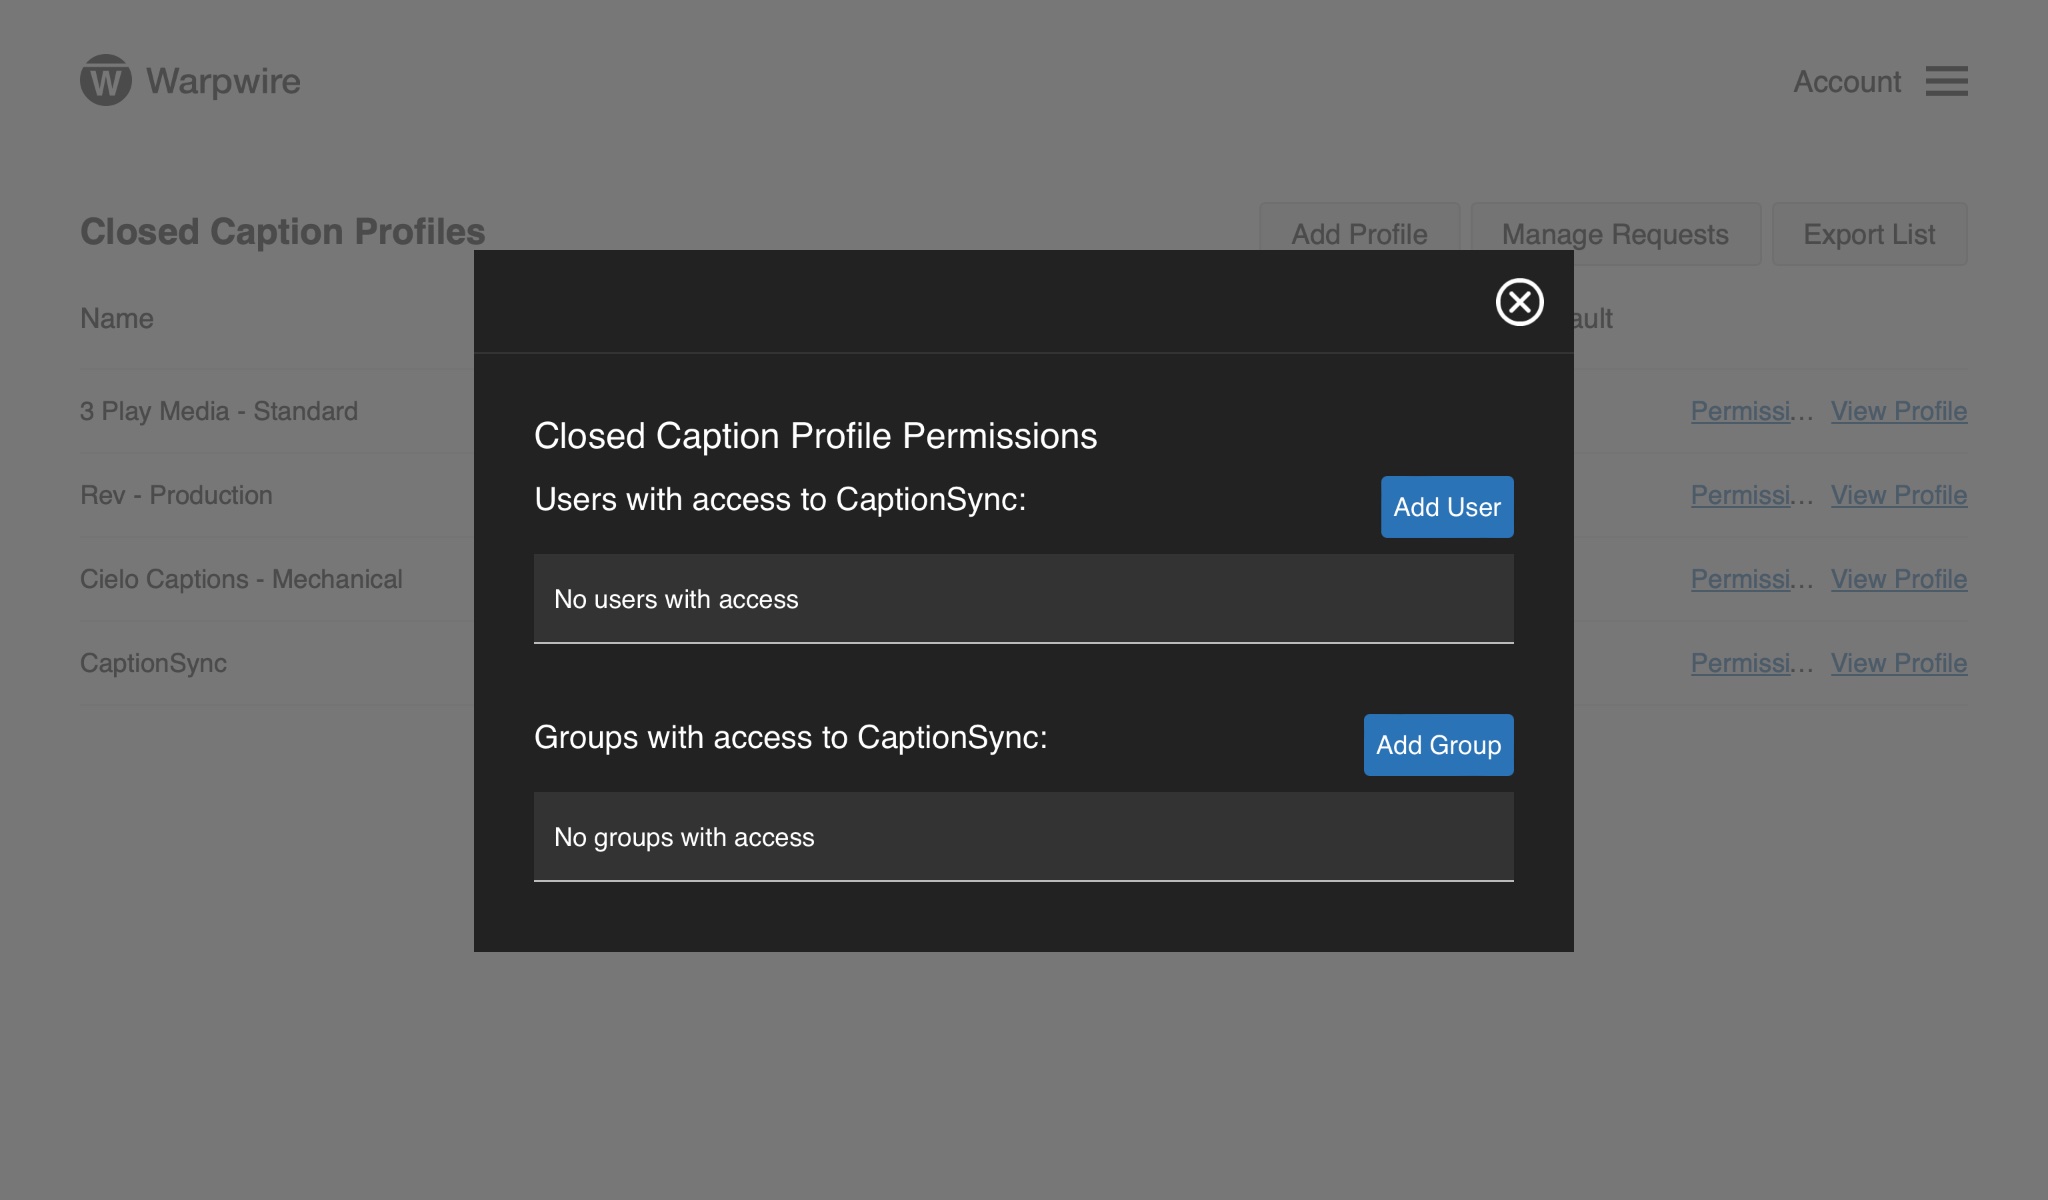 Closed Caption Profiles Permission workflow